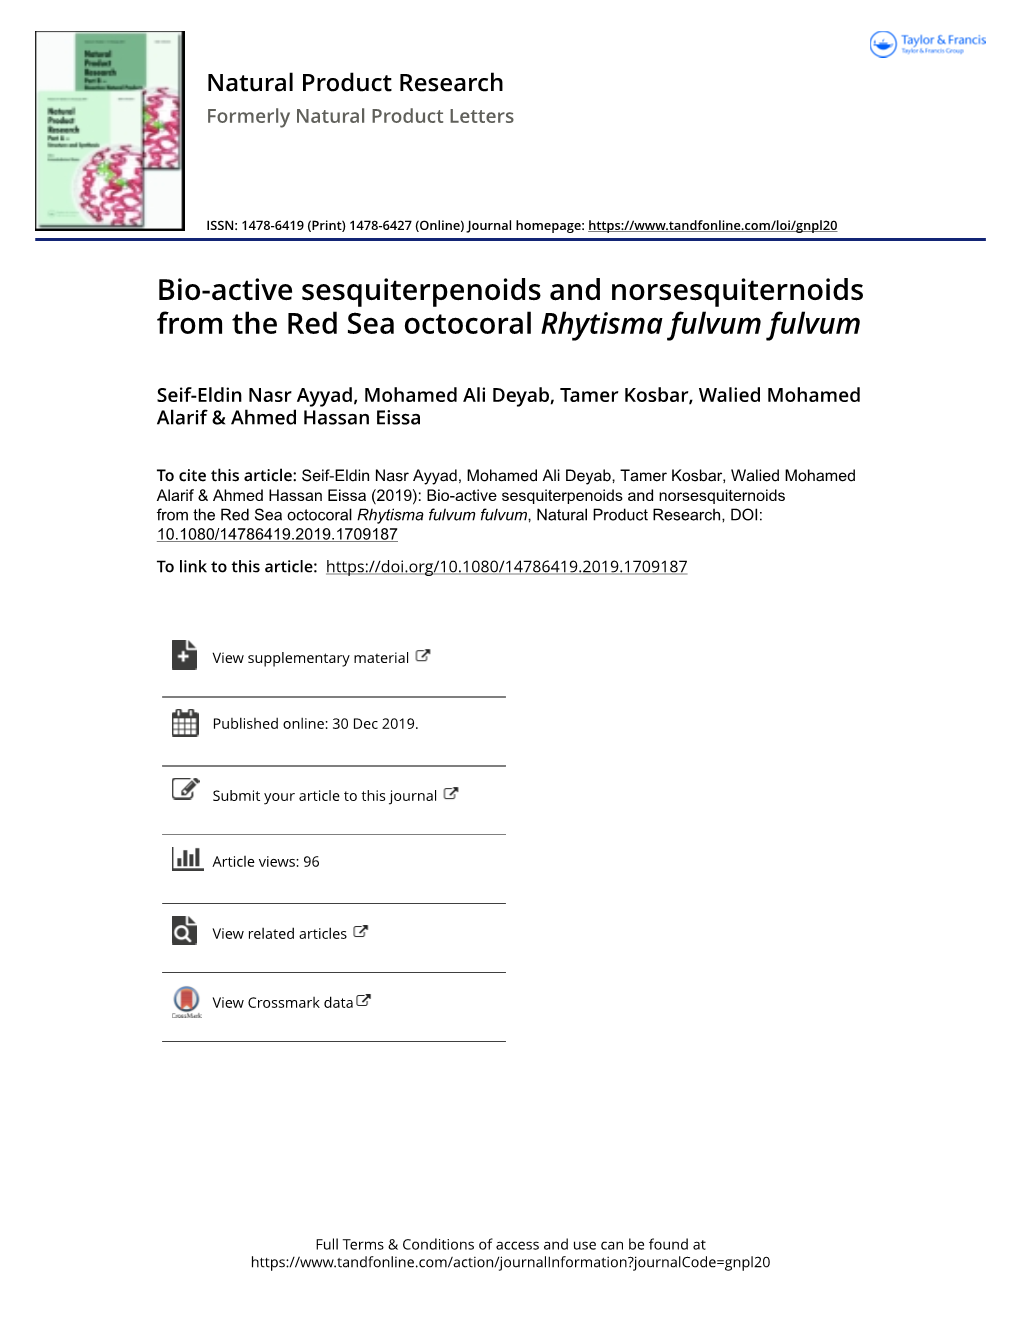 Bio-Active Sesquiterpenoids and Norsesquiternoids from the Red Sea Octocoral Rhytisma Fulvum Fulvum